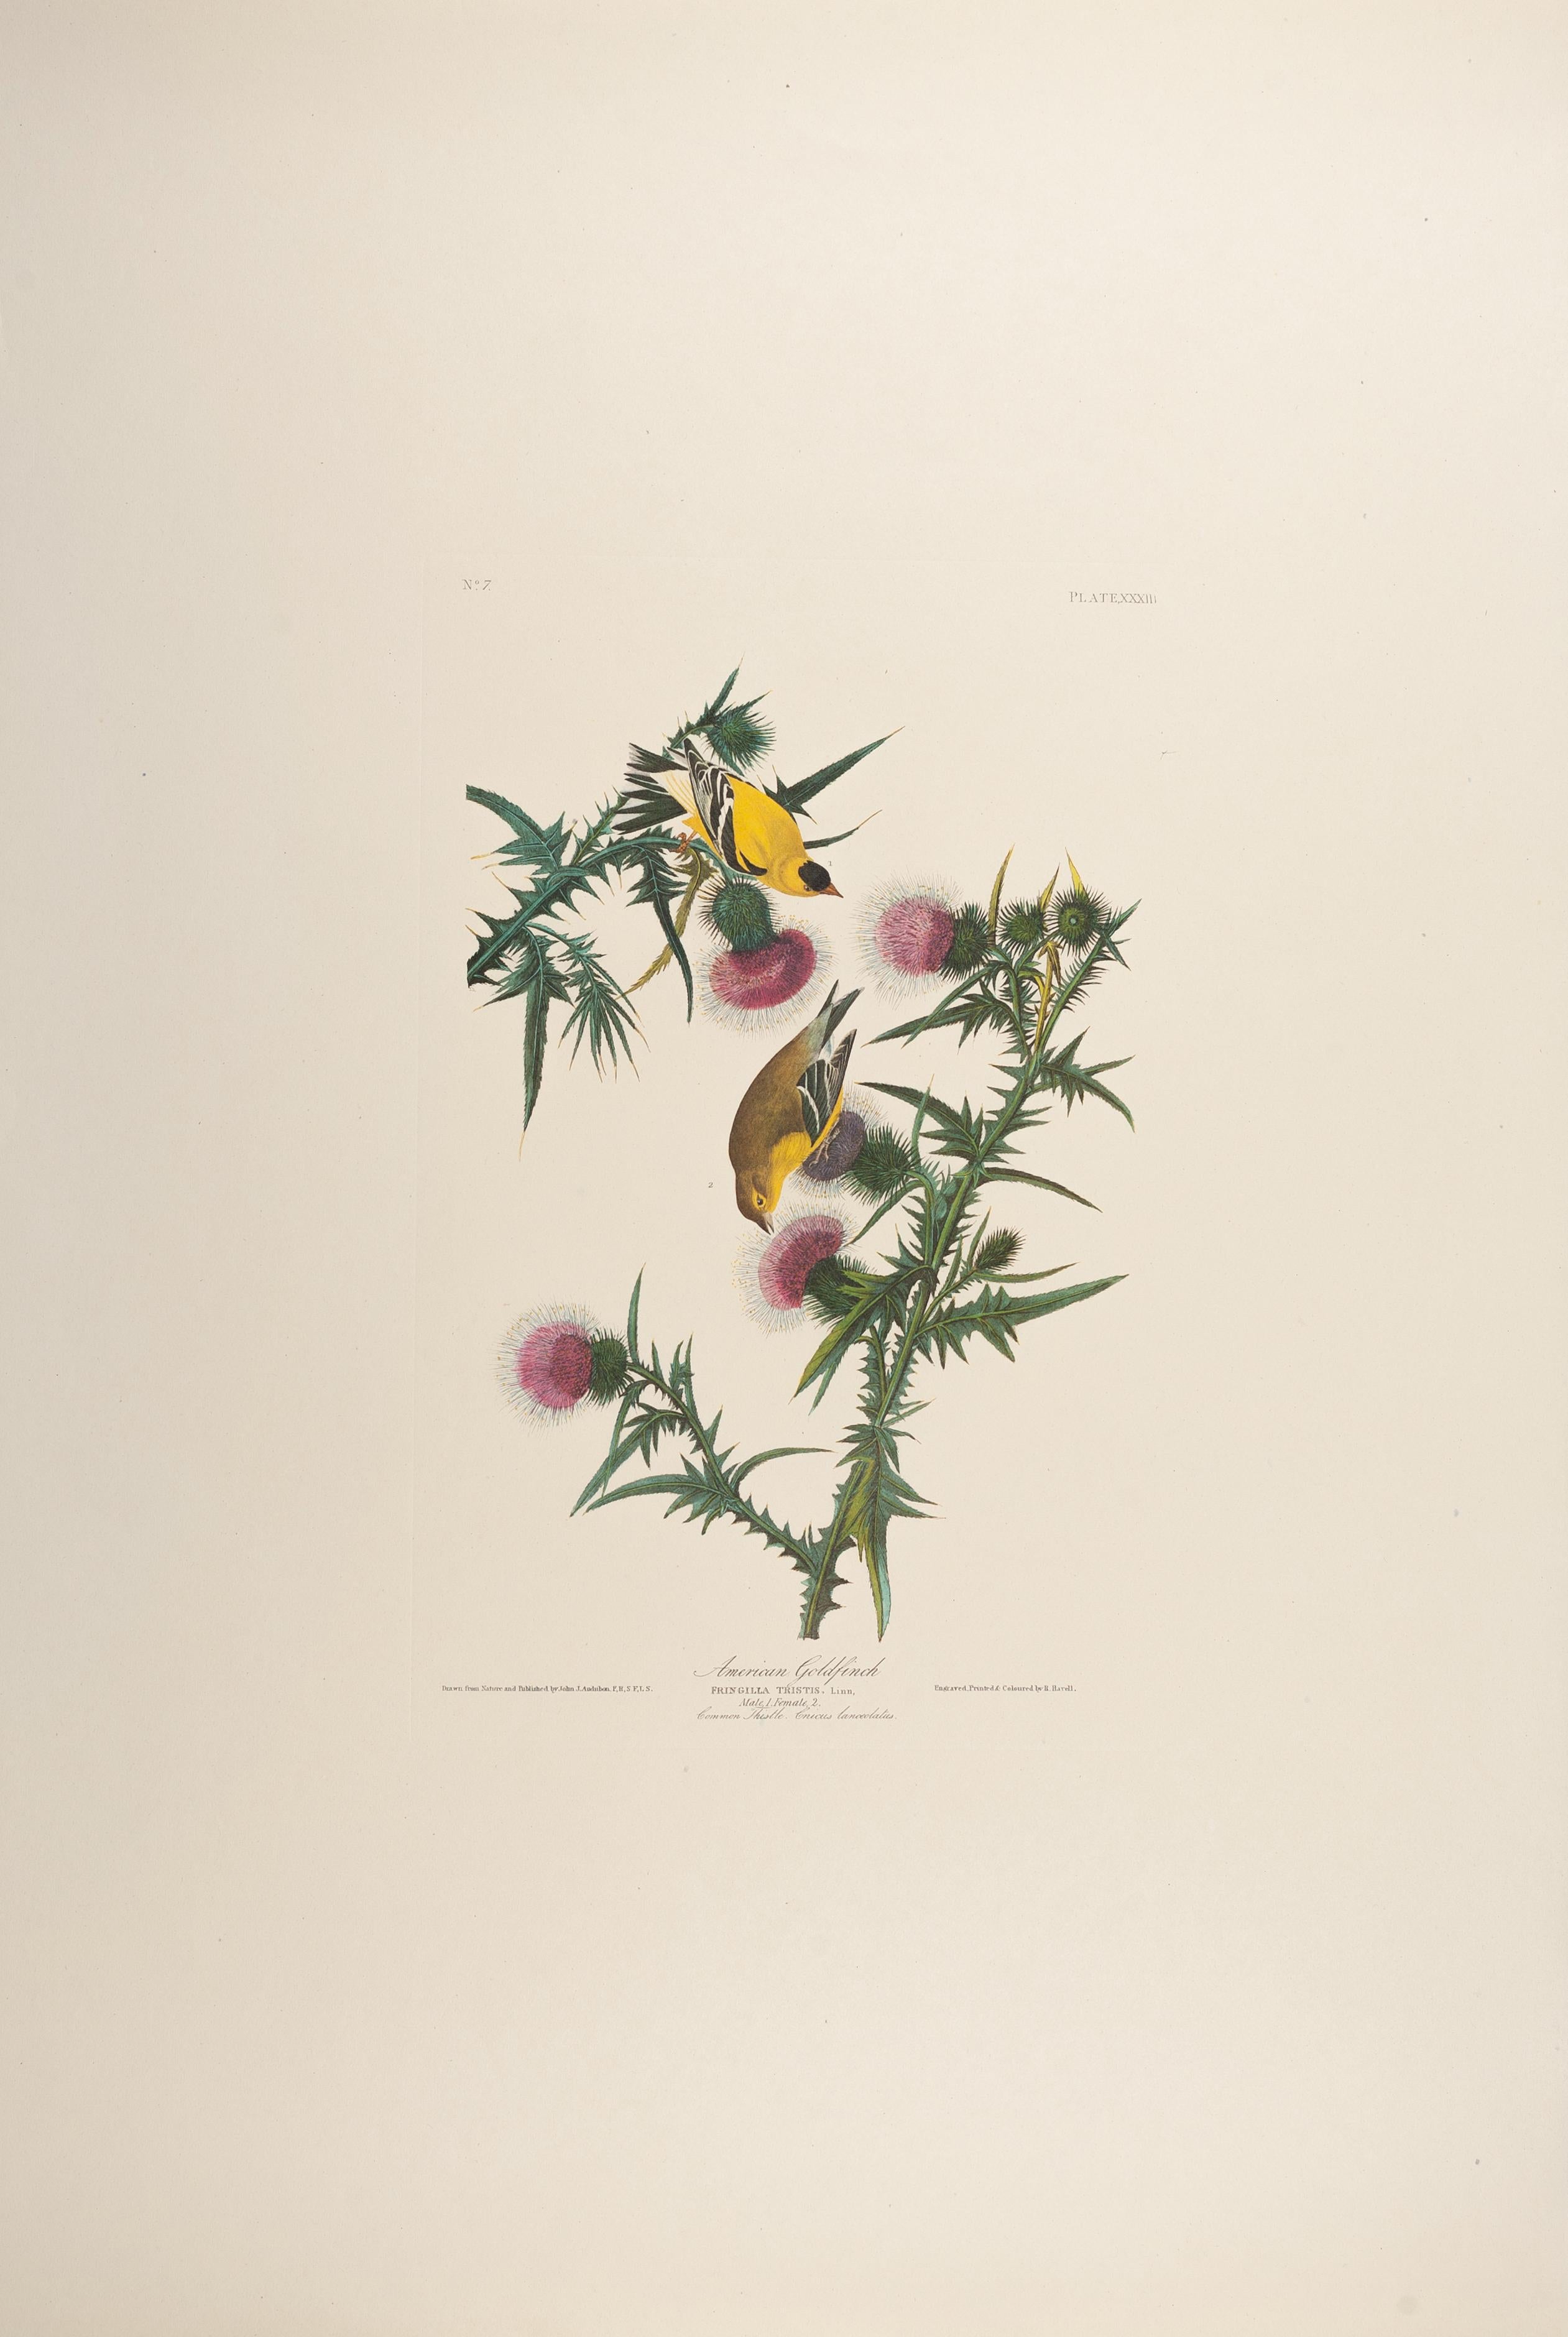 John James Audubon Animal Print - The Birds of America "American Goldfinch" Plate 33